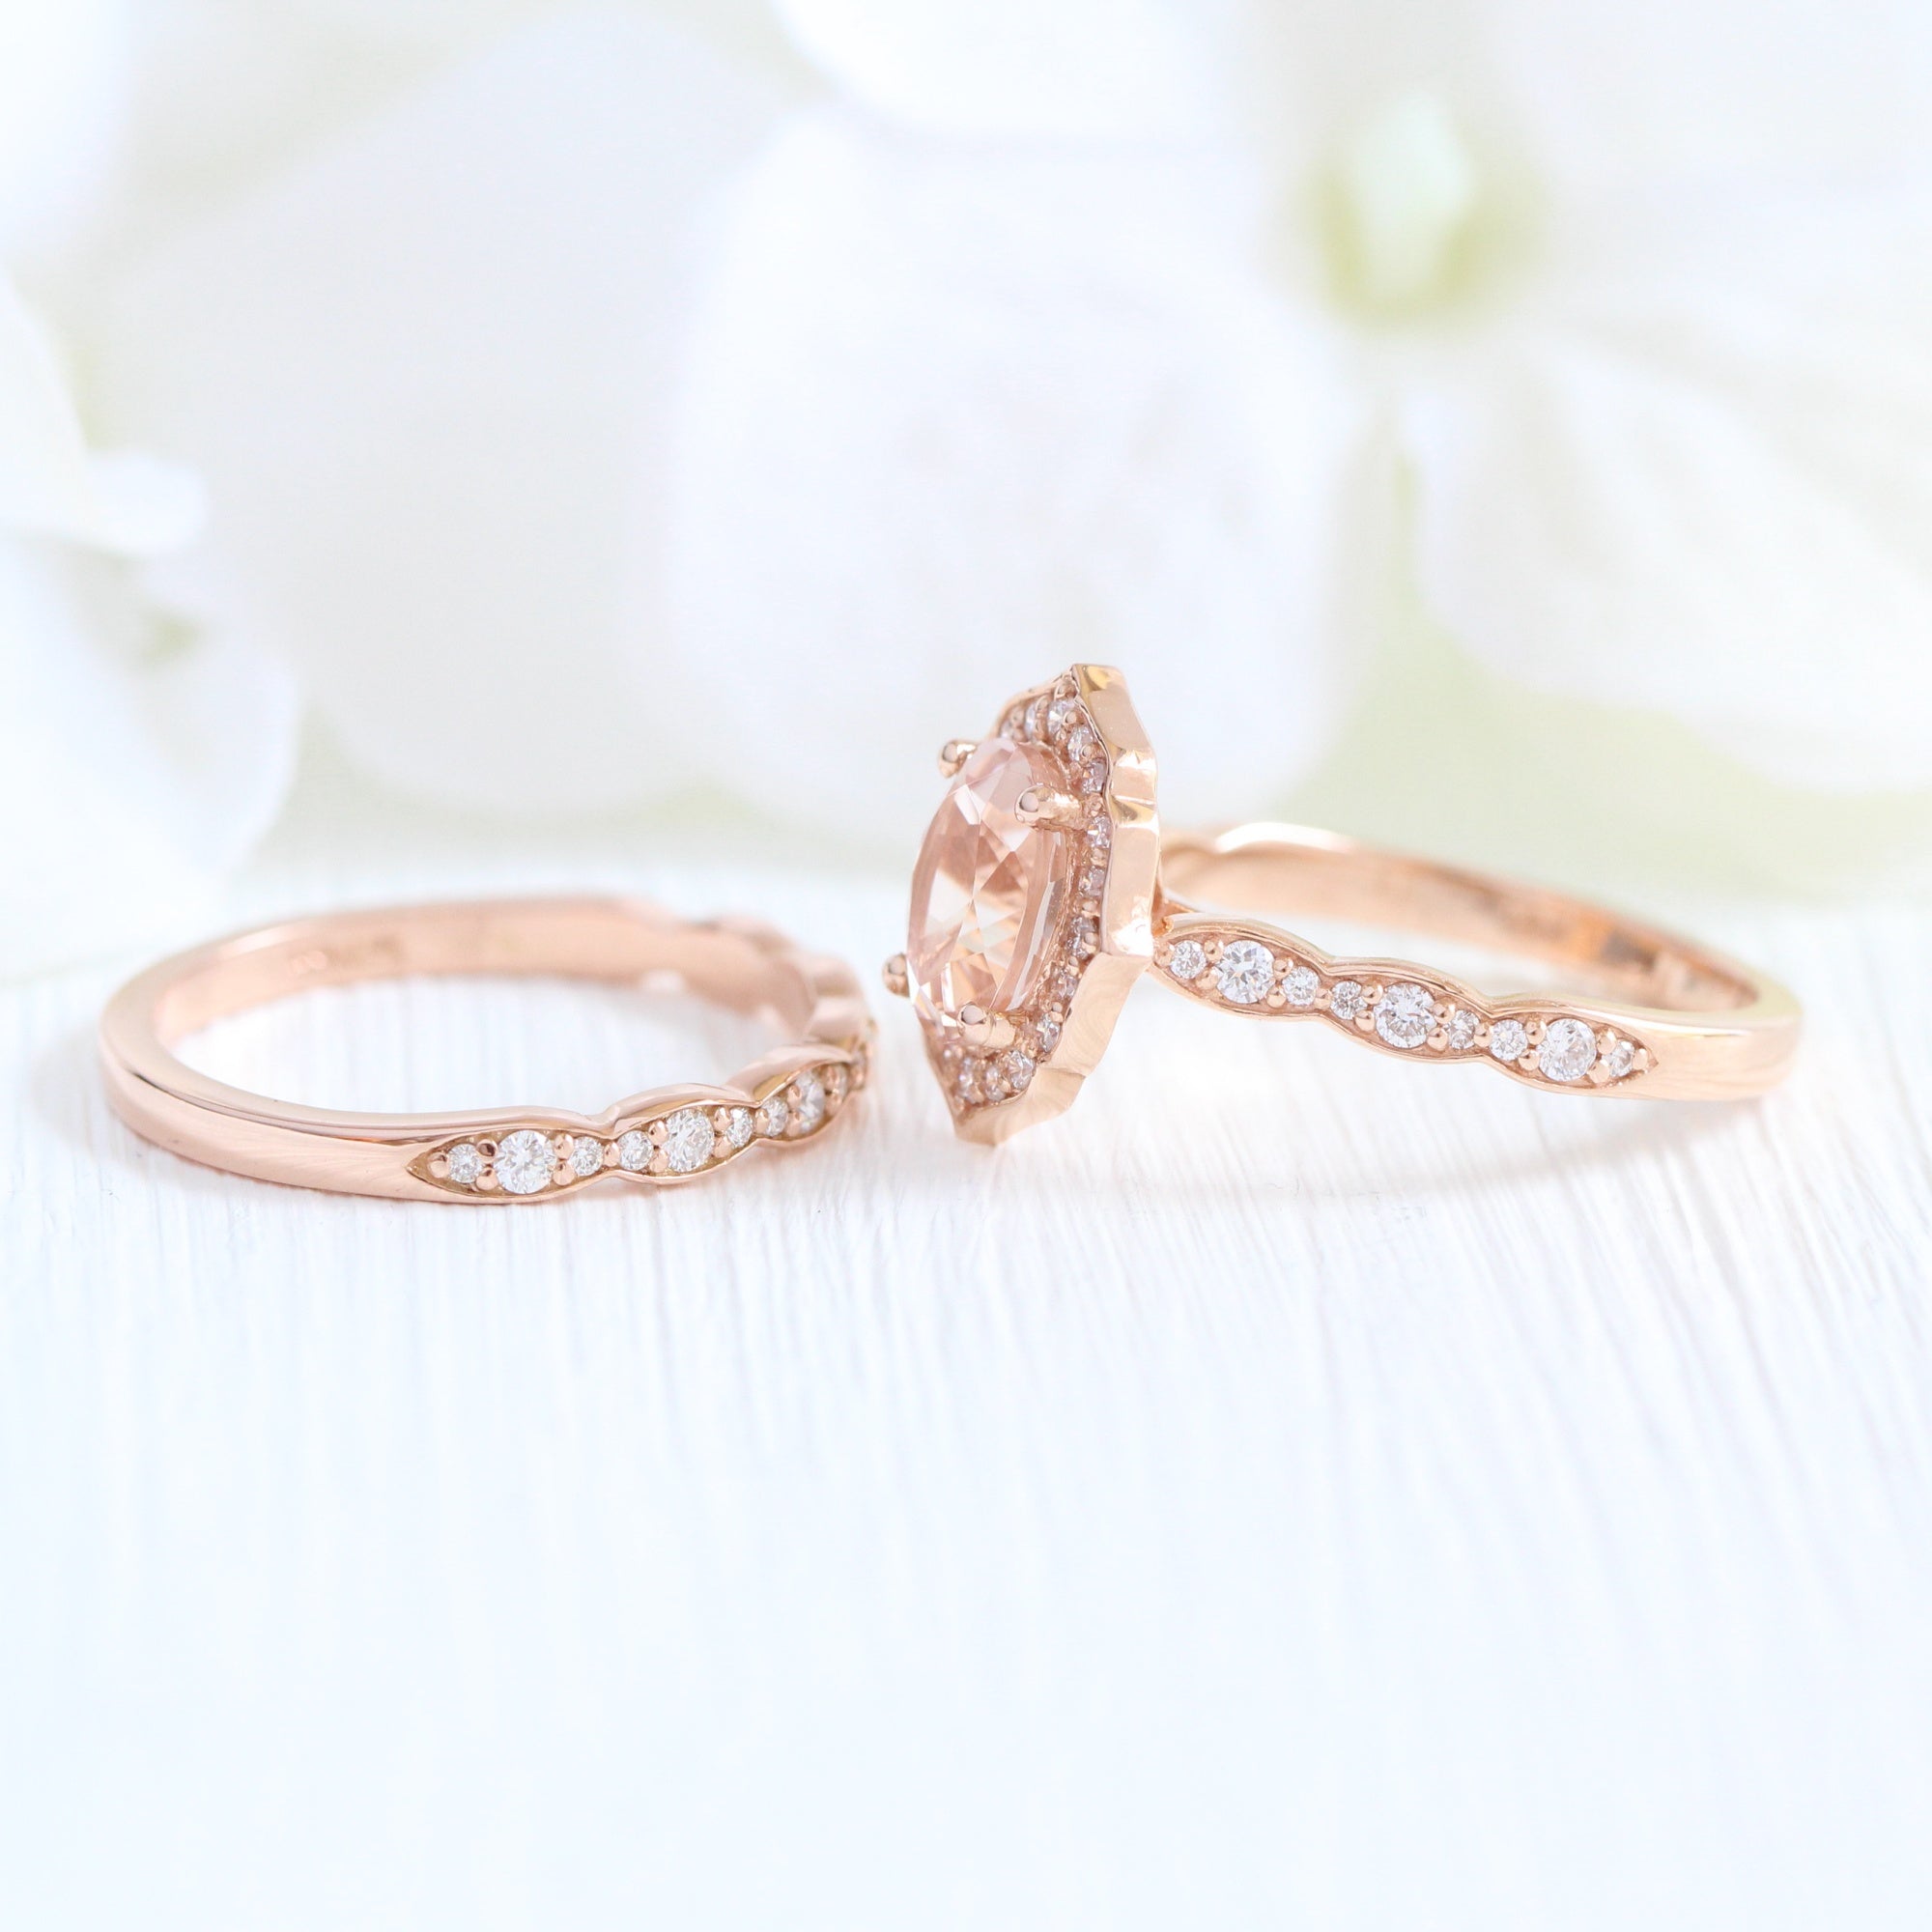 vintage halo diamond morganite ring stack rose gold curved wedding band la more design jewelry